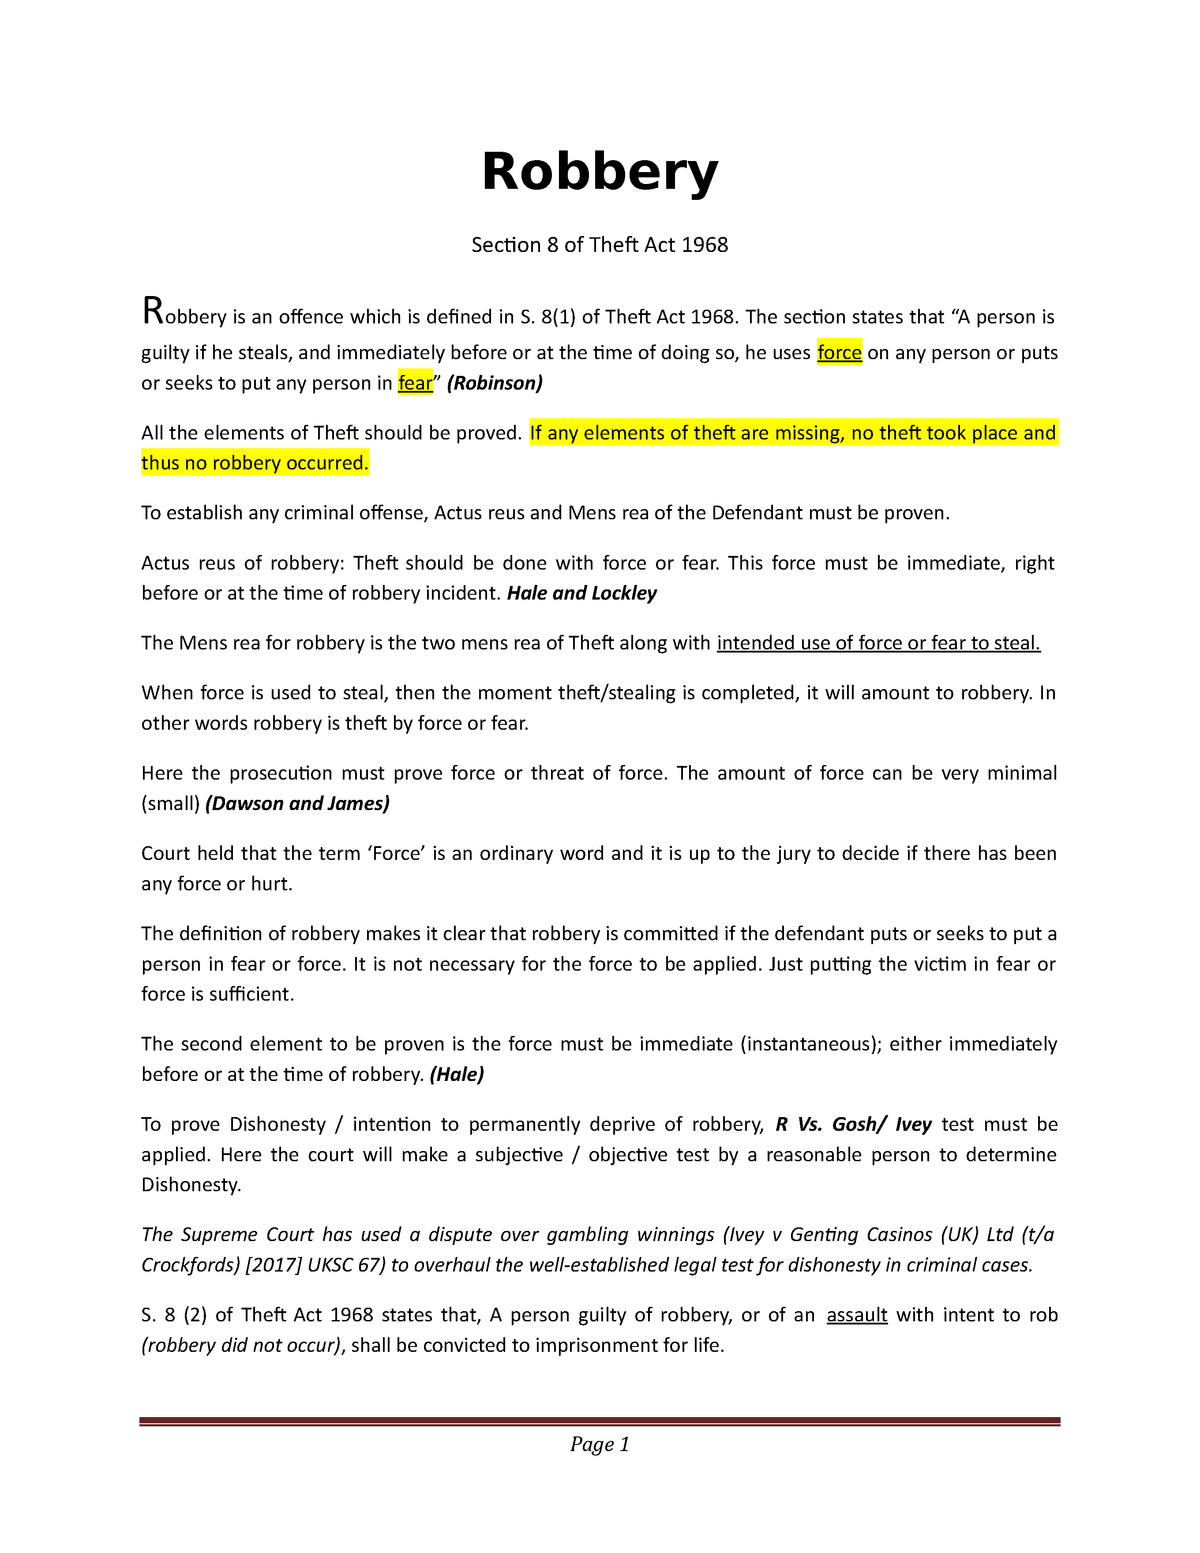 descriptive essay about robbery